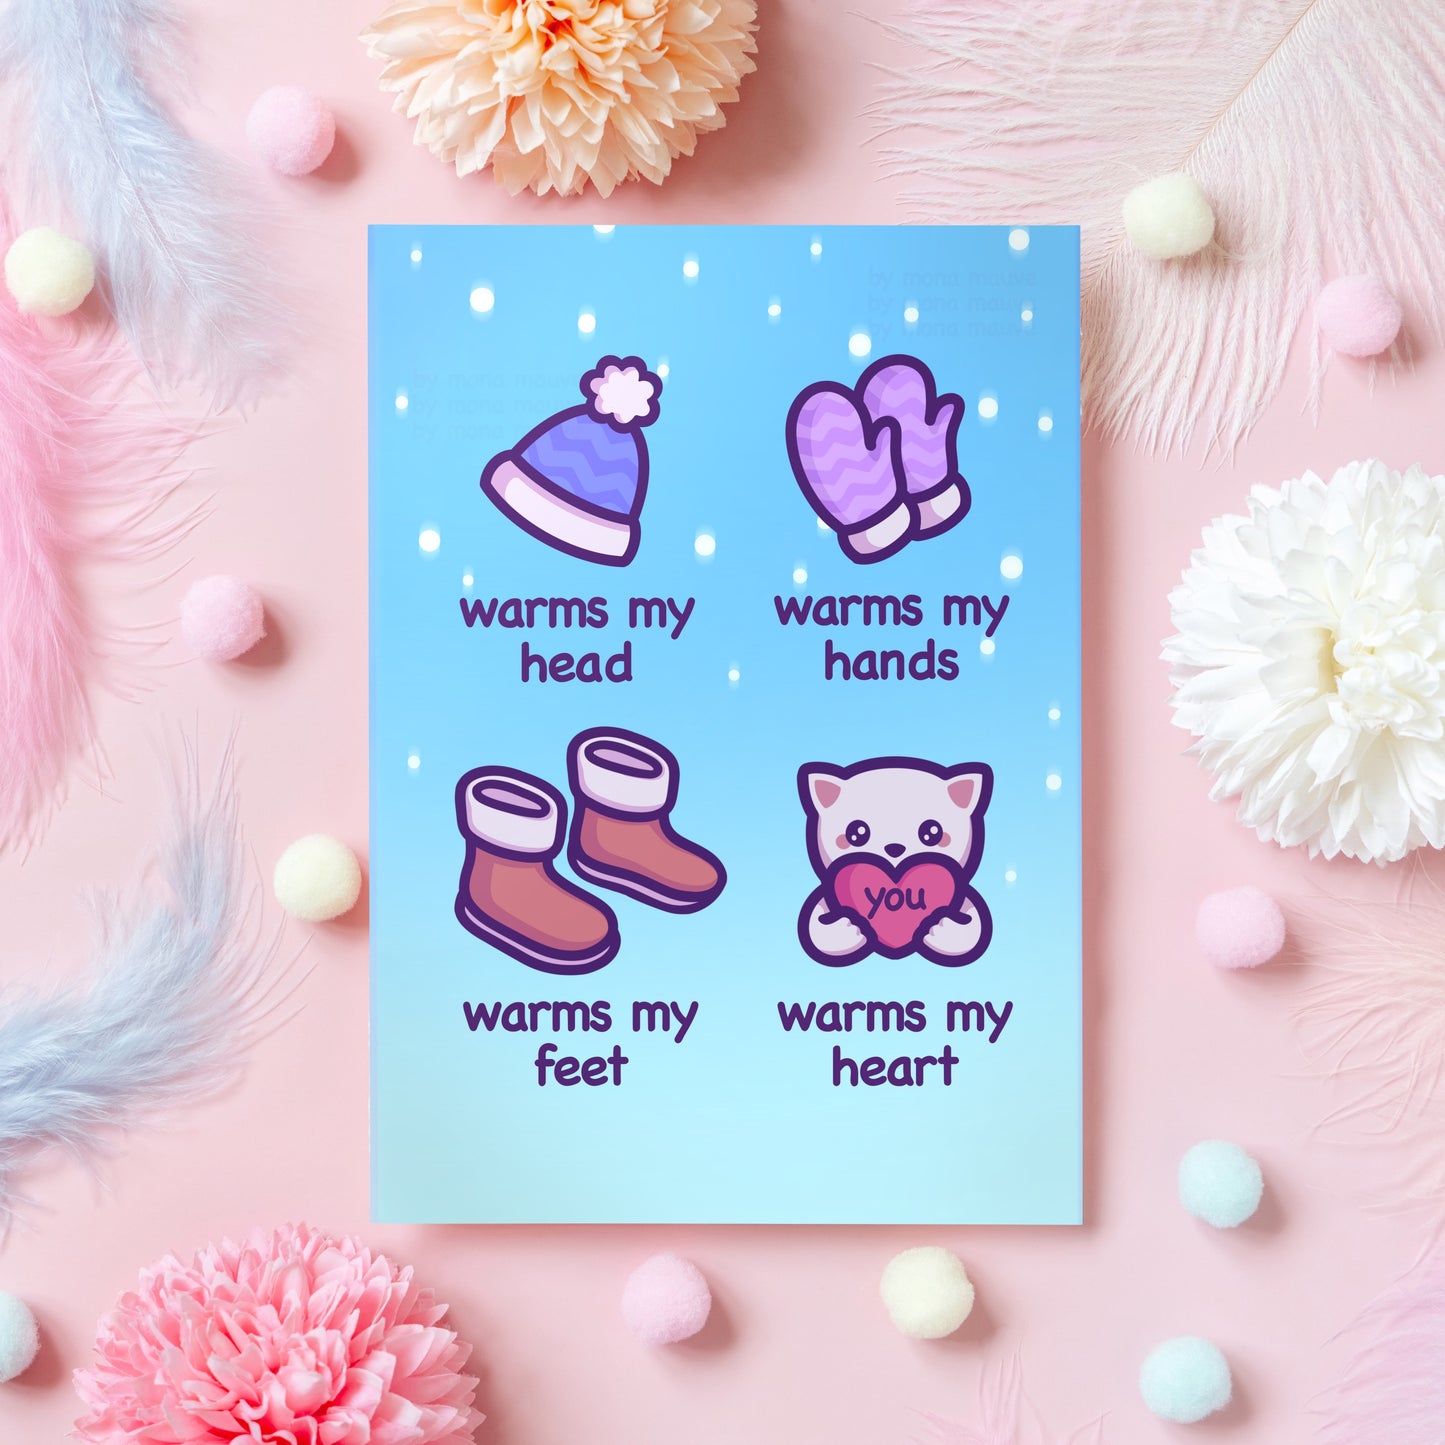 You Warm My Heart! | Cute & Heartfelt Anniversary Card | For Husband, Boyfriend, Girlfriend - Her or Him